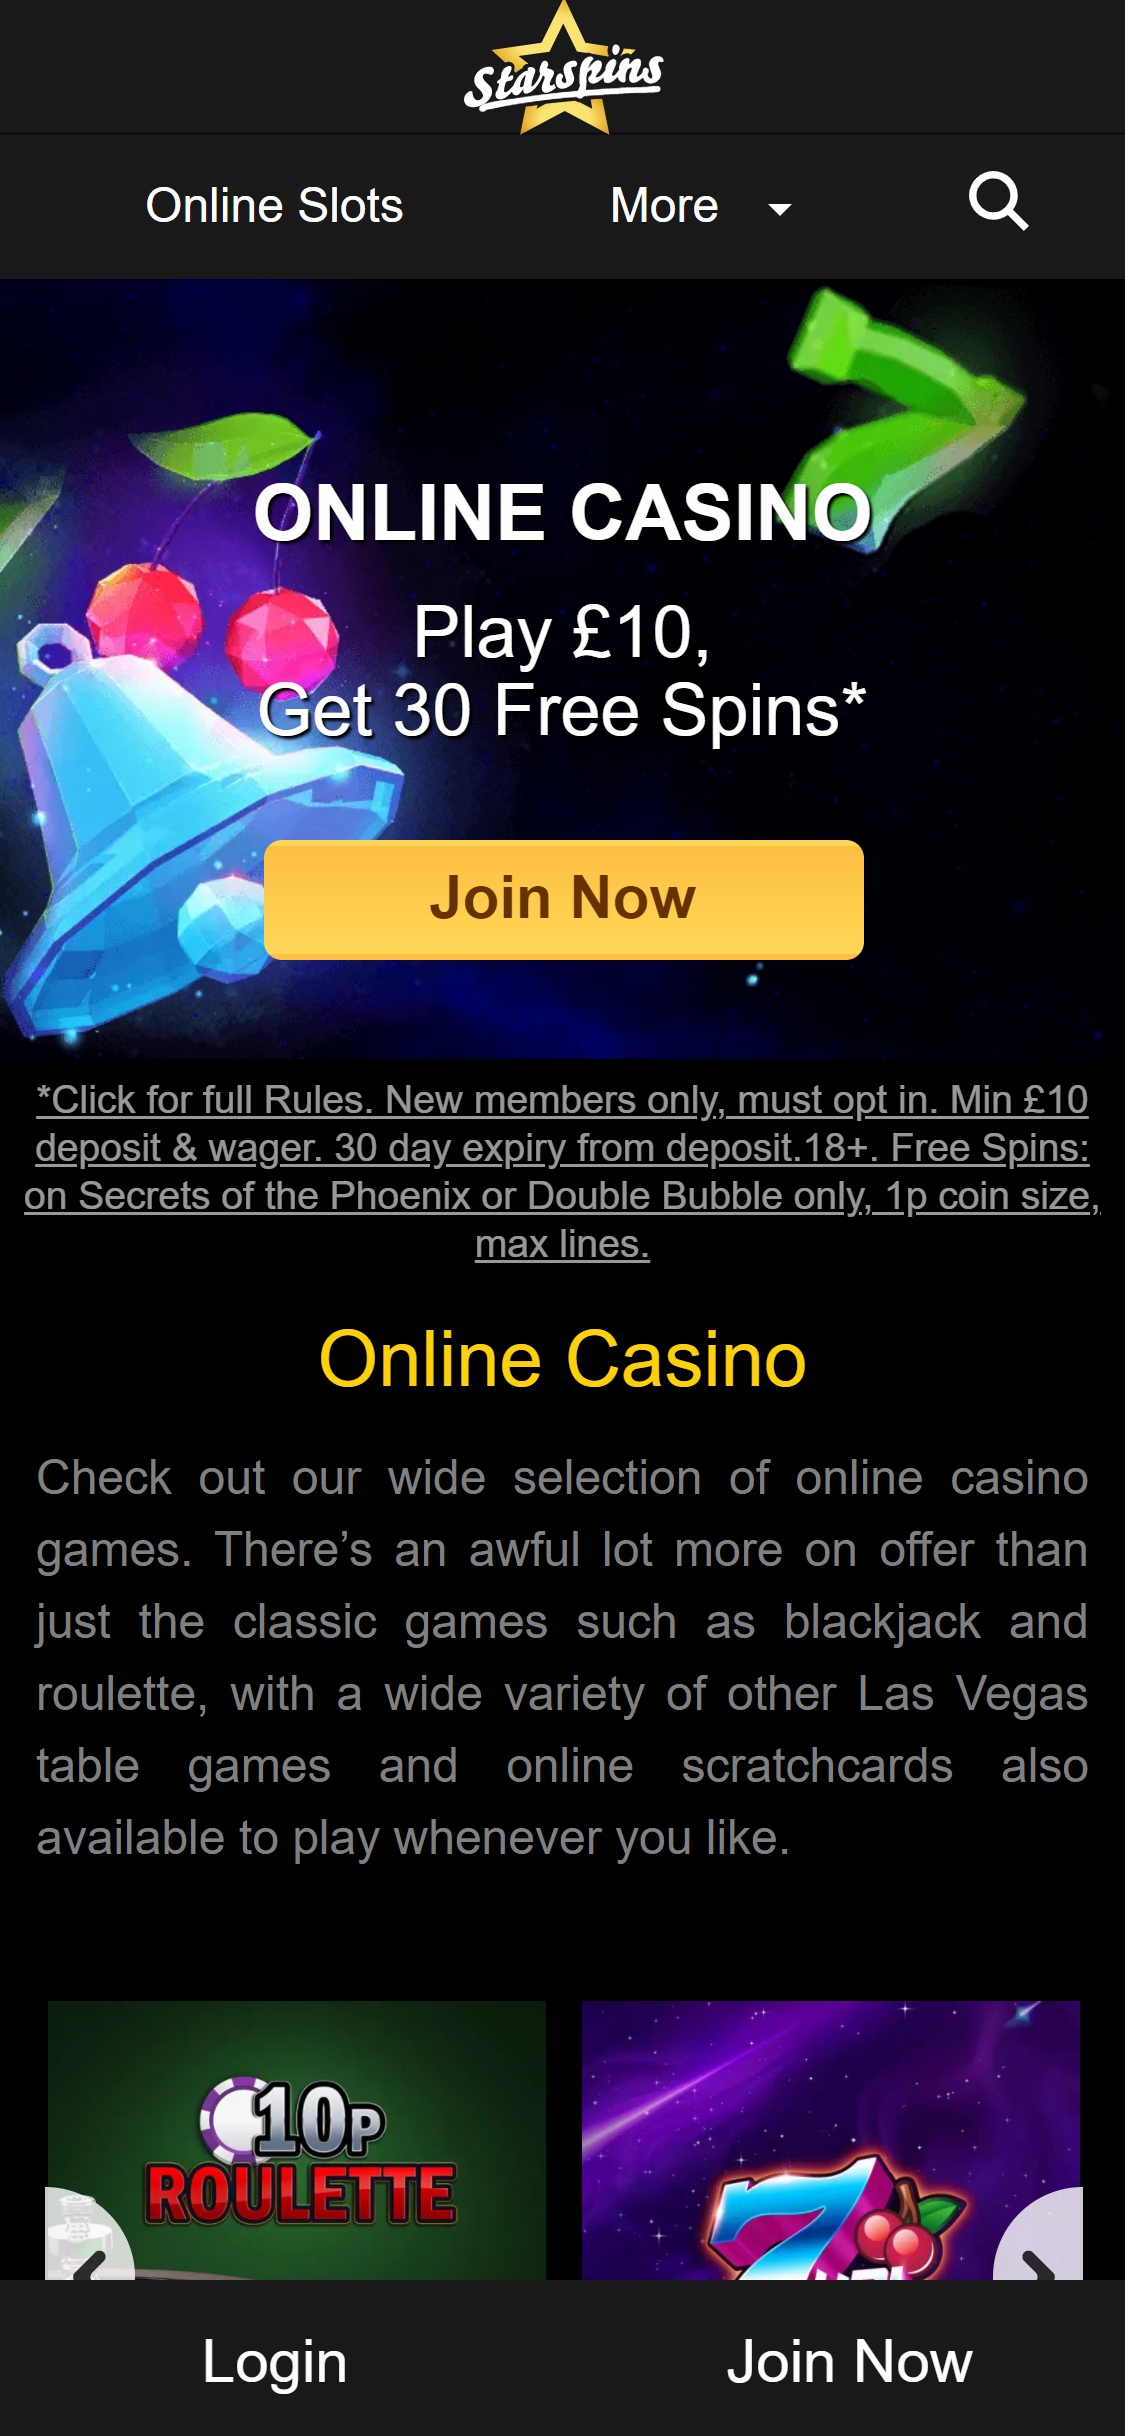 Starspins Casino Mobile No Deposit Bonus Review